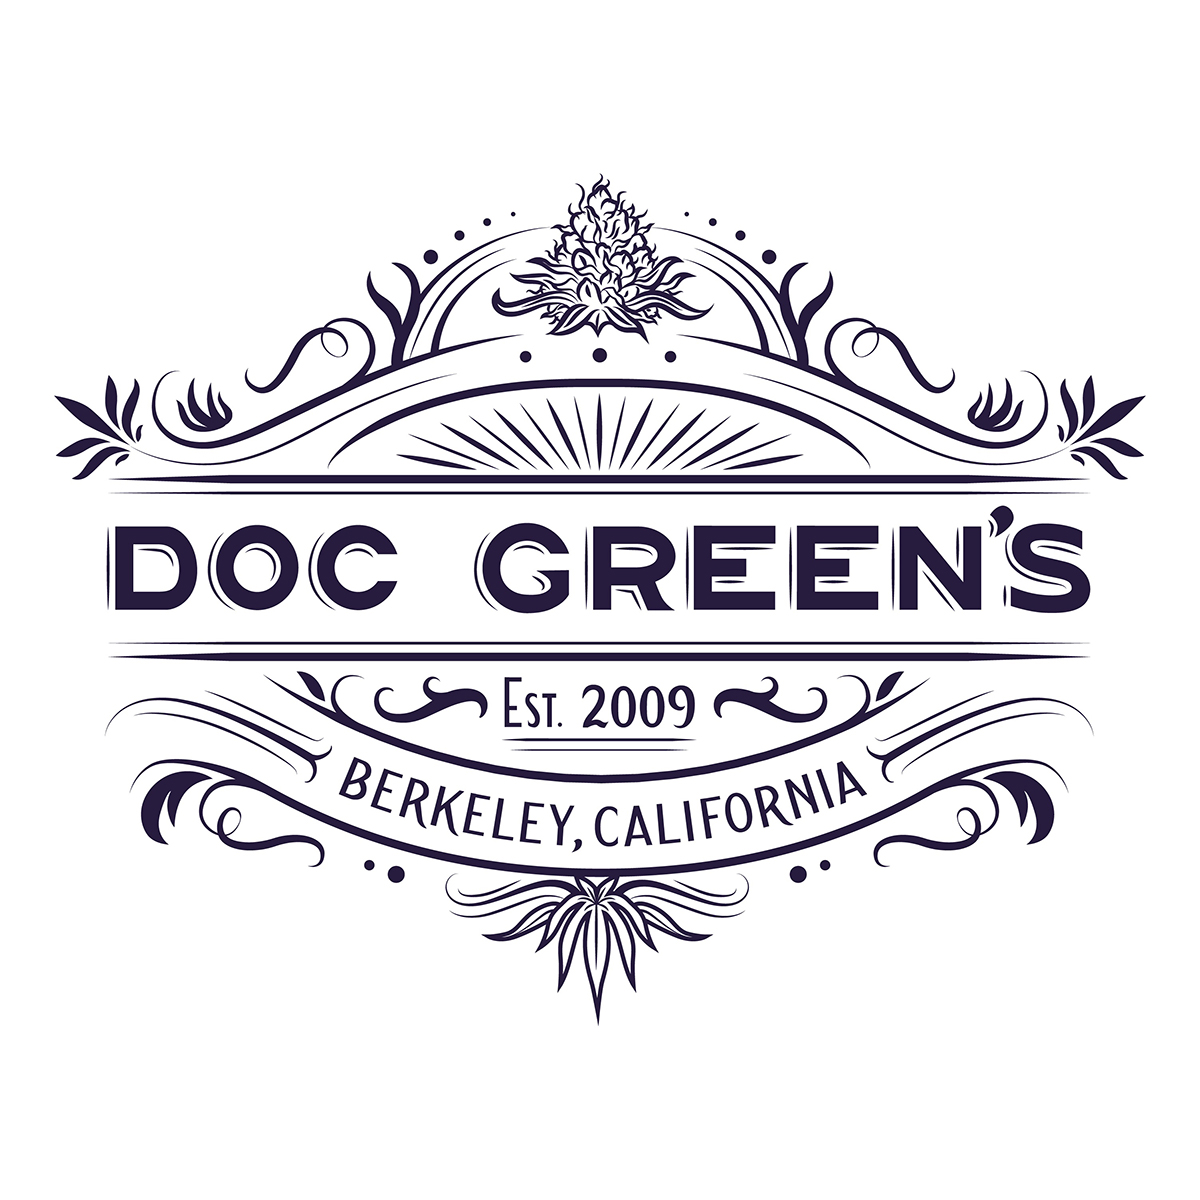 Doc Green's